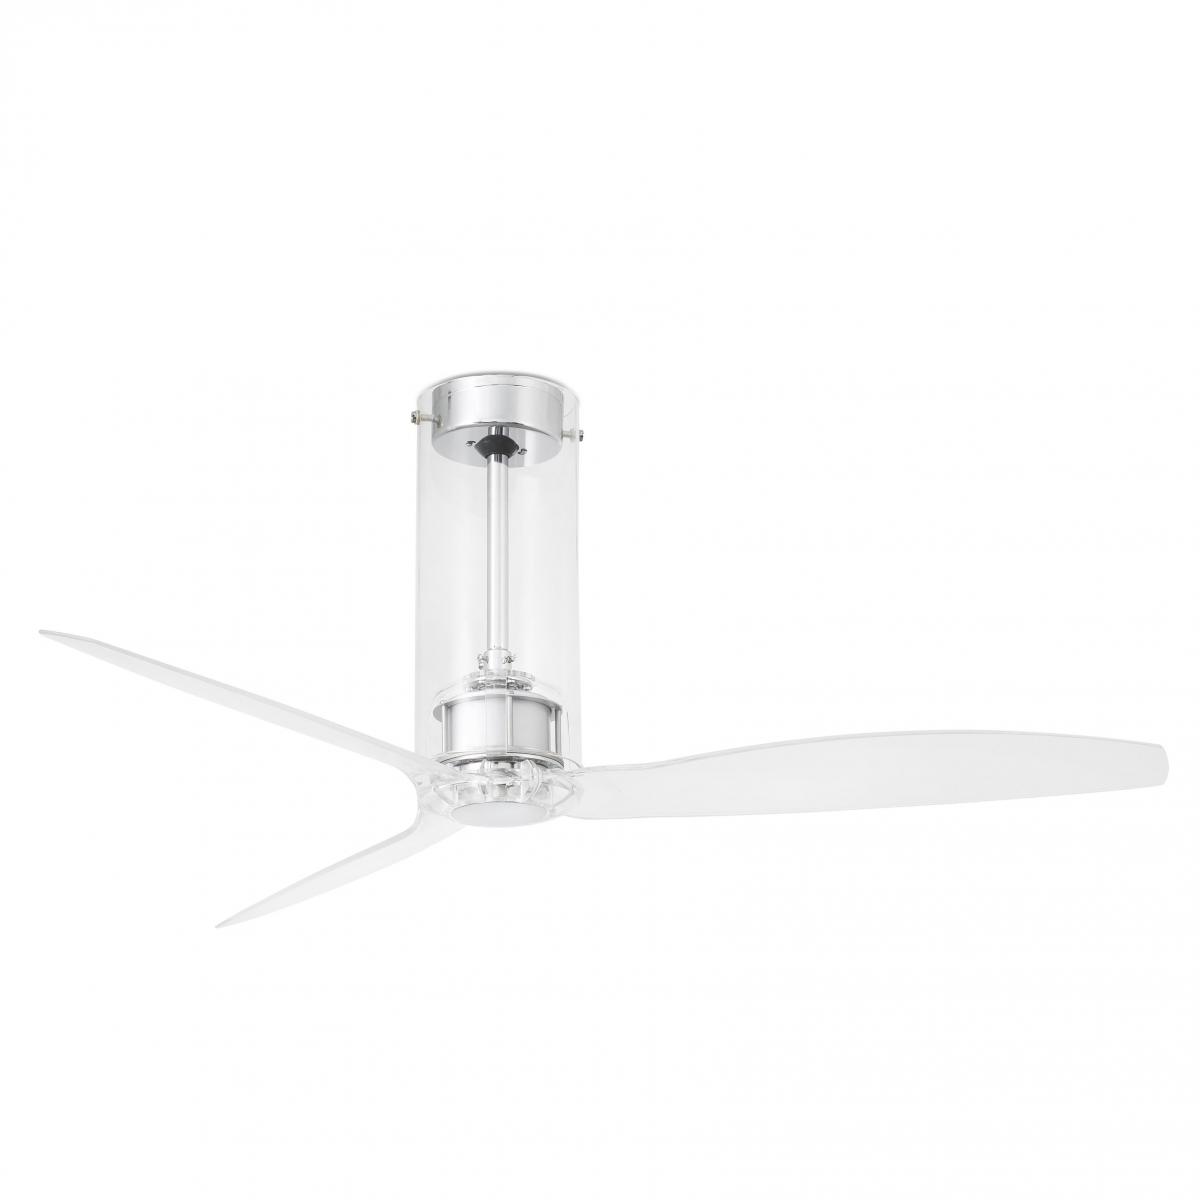 Прозрачный потолочный вентилятор Tube Fan